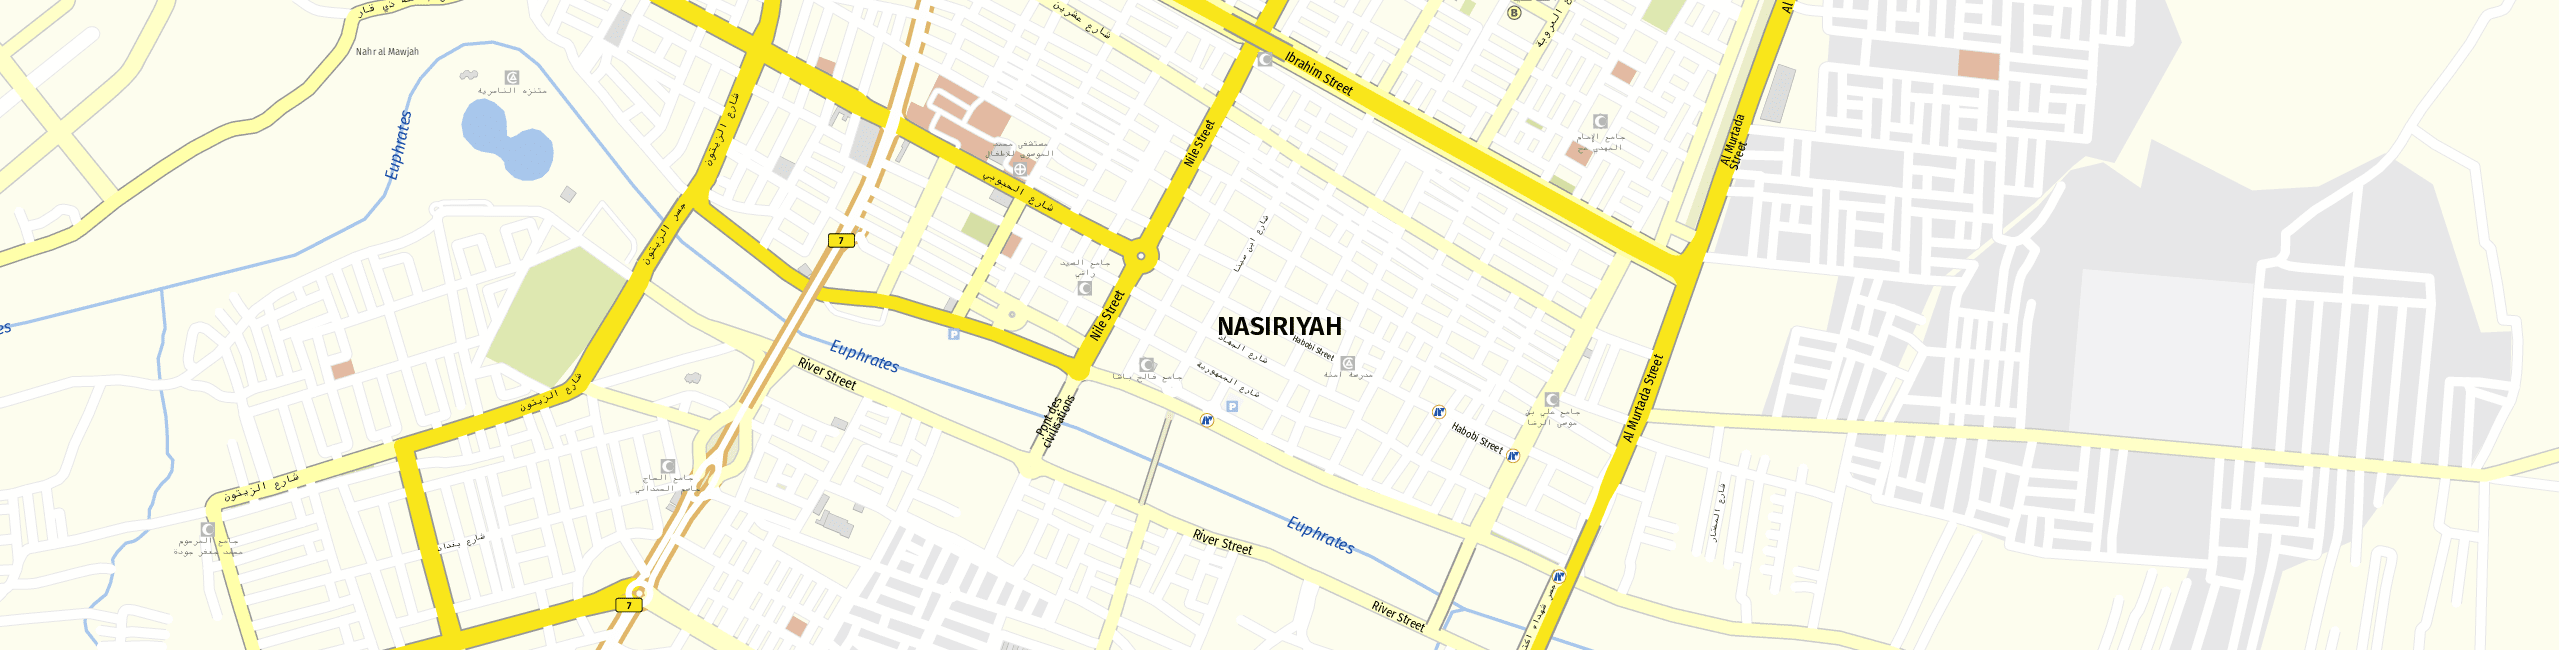 Stadtplan Nasiriyah zum Downloaden.